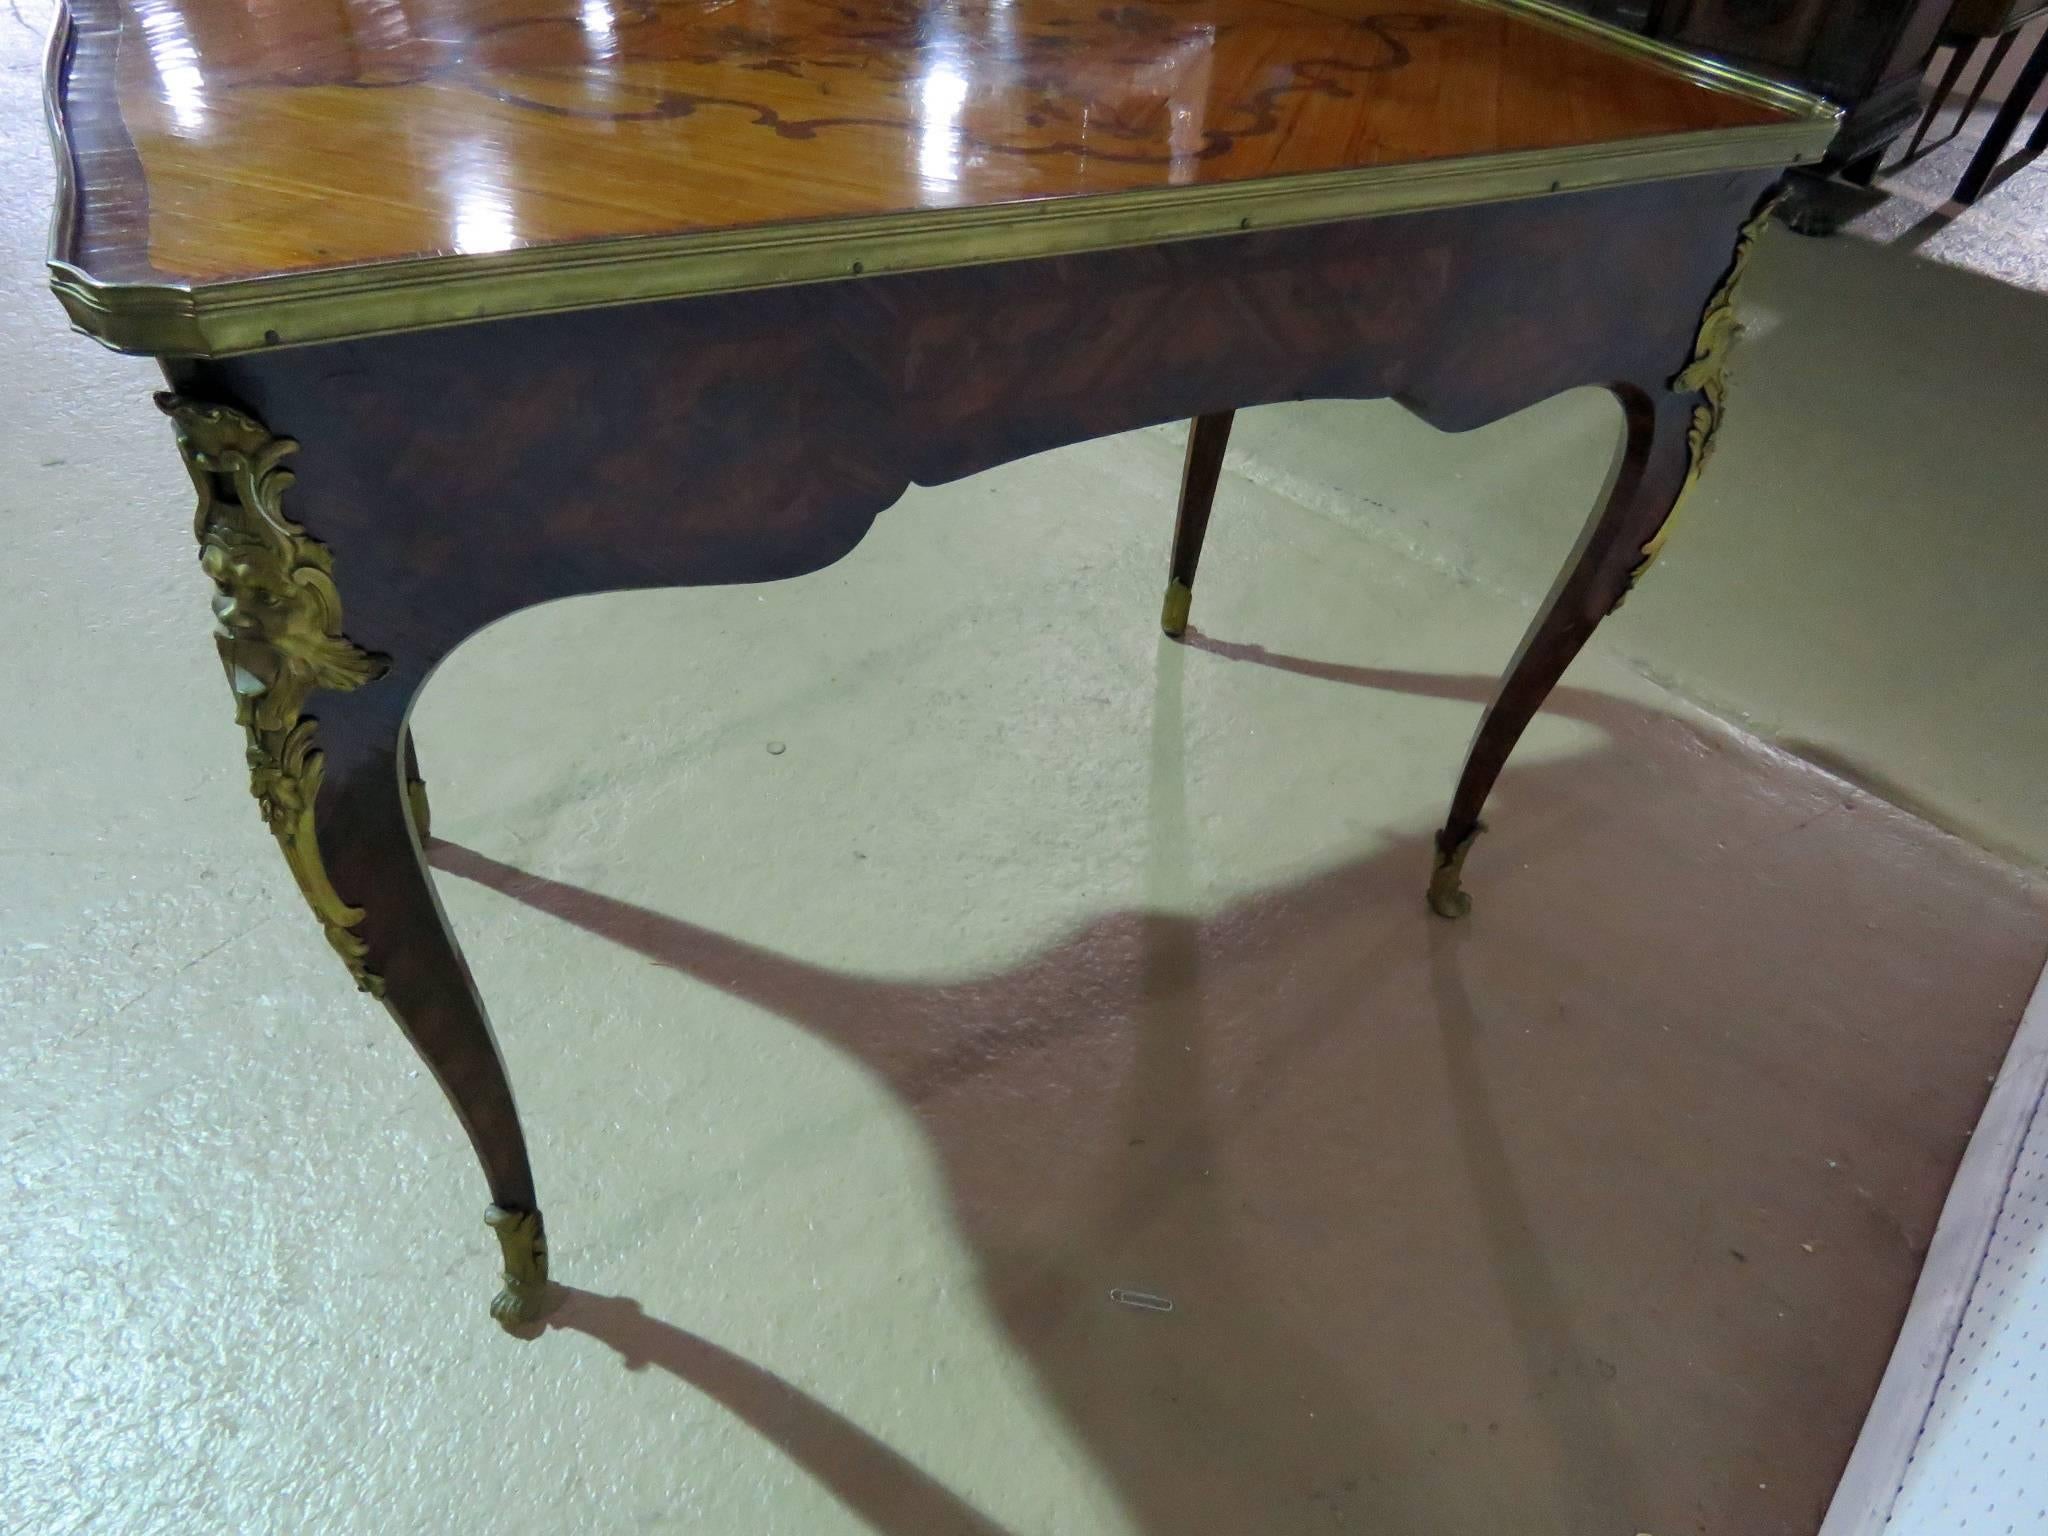 1870s Era French Inlaid Kingwood Louis XV Bureau Plat Writing Table Desk 1